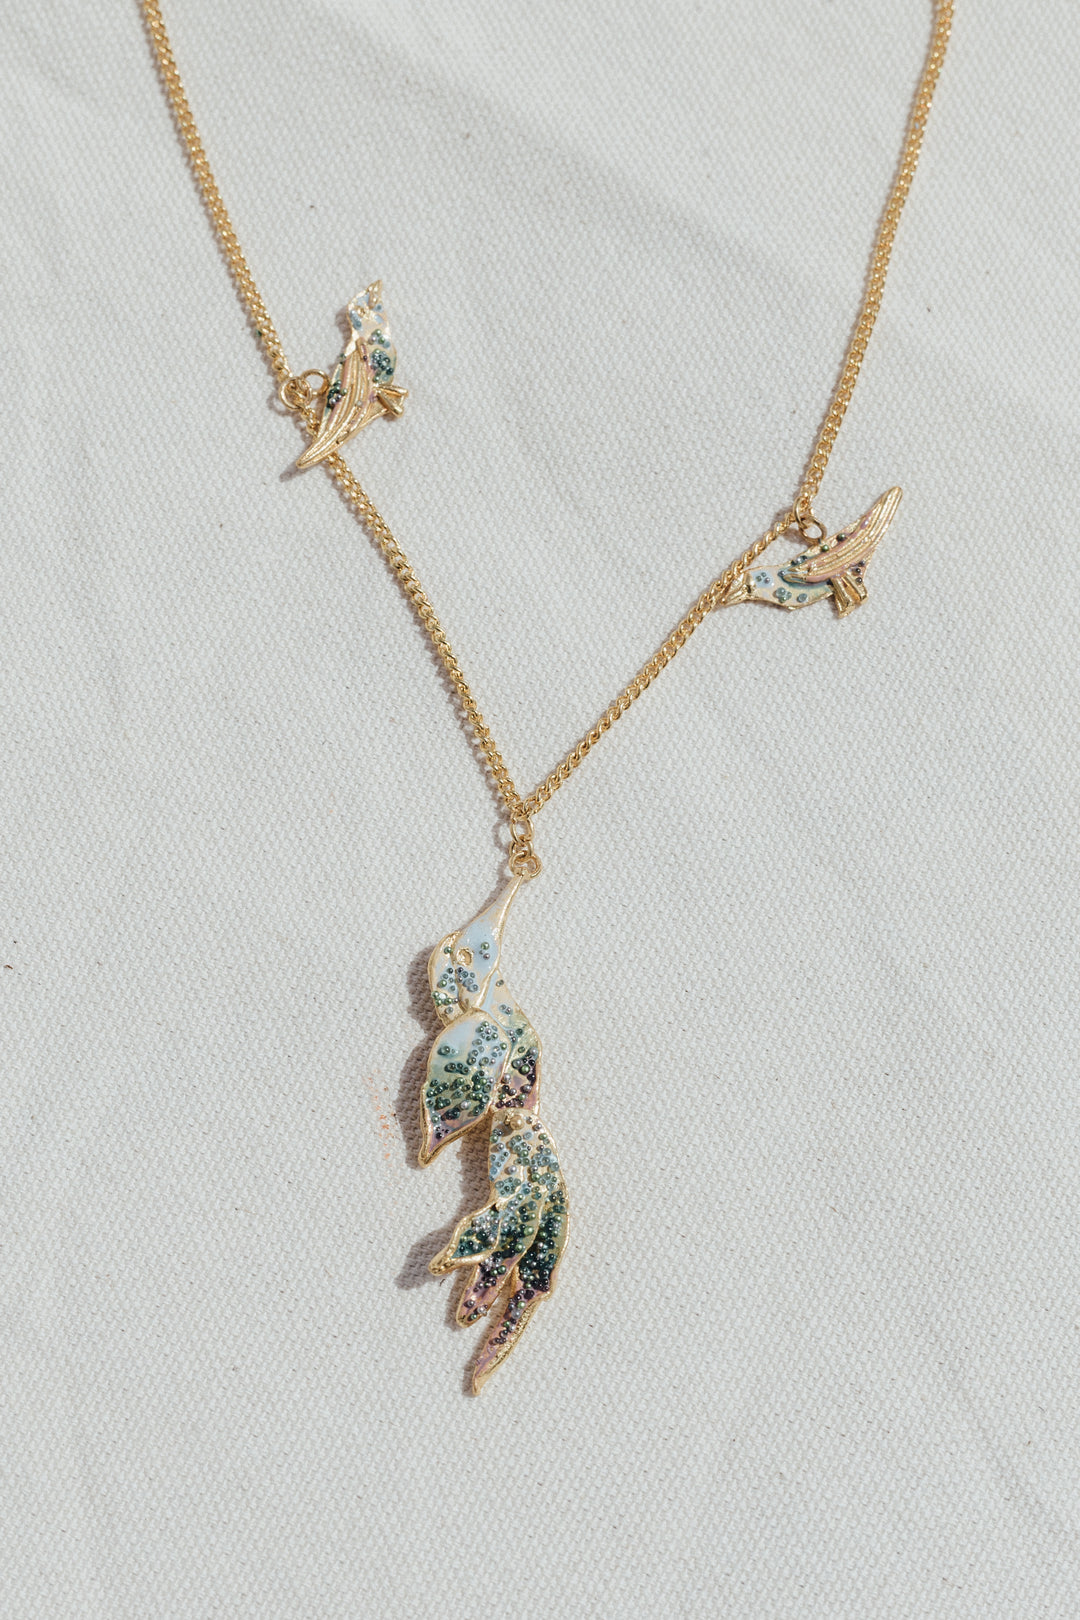 Colibri/Tangarita Necklace